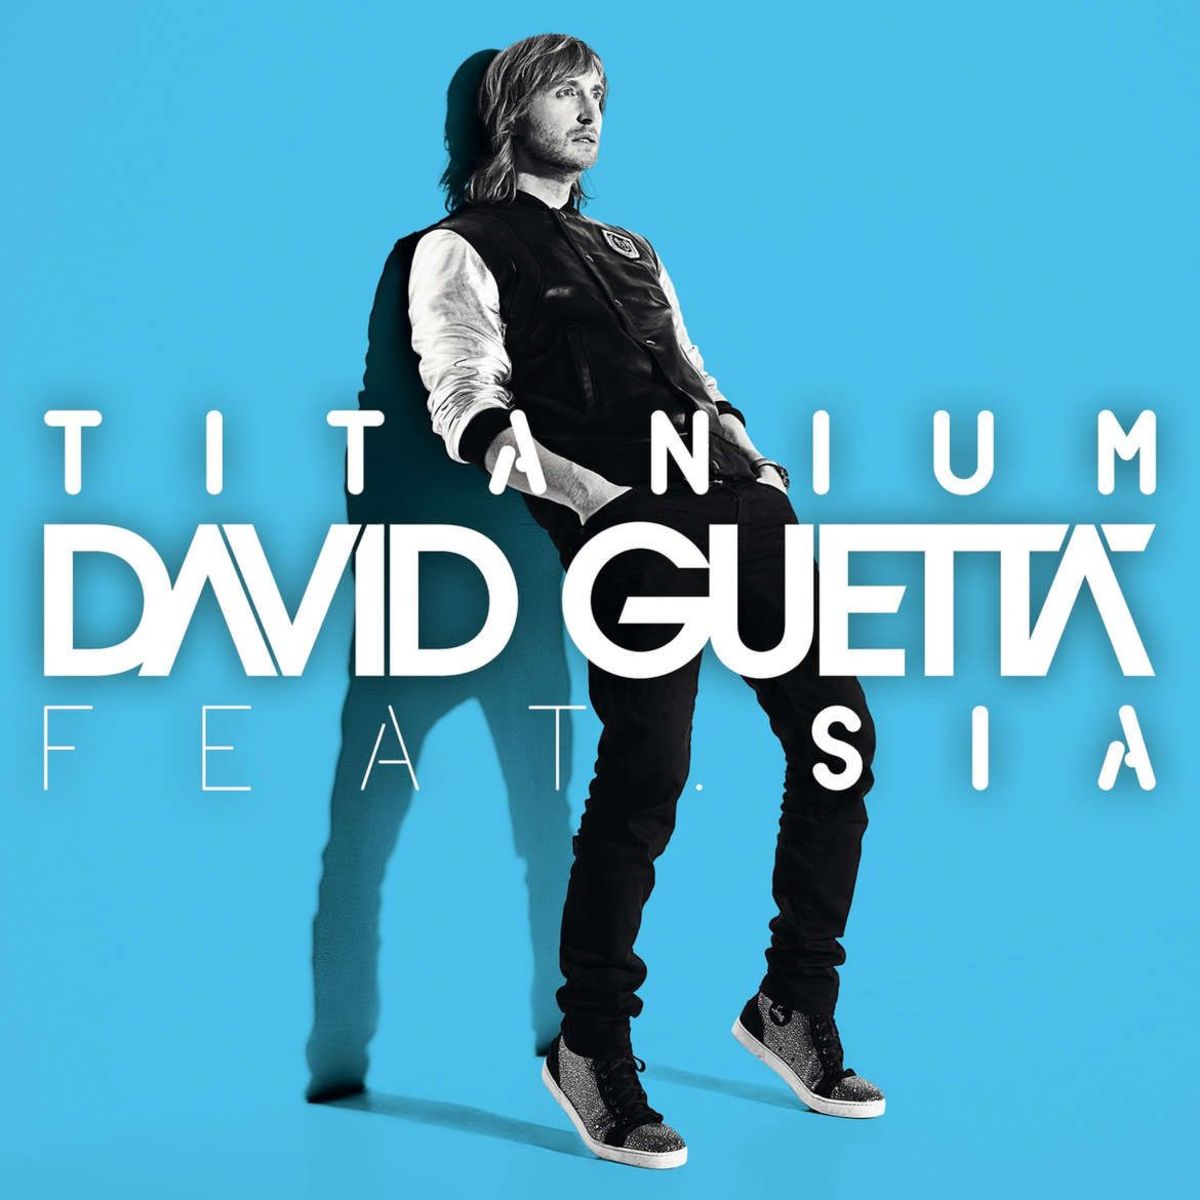 Titanium by David Guetta ft. Sia